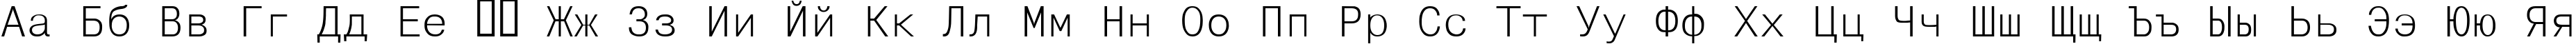 Пример написания русского алфавита шрифтом HelvFixed